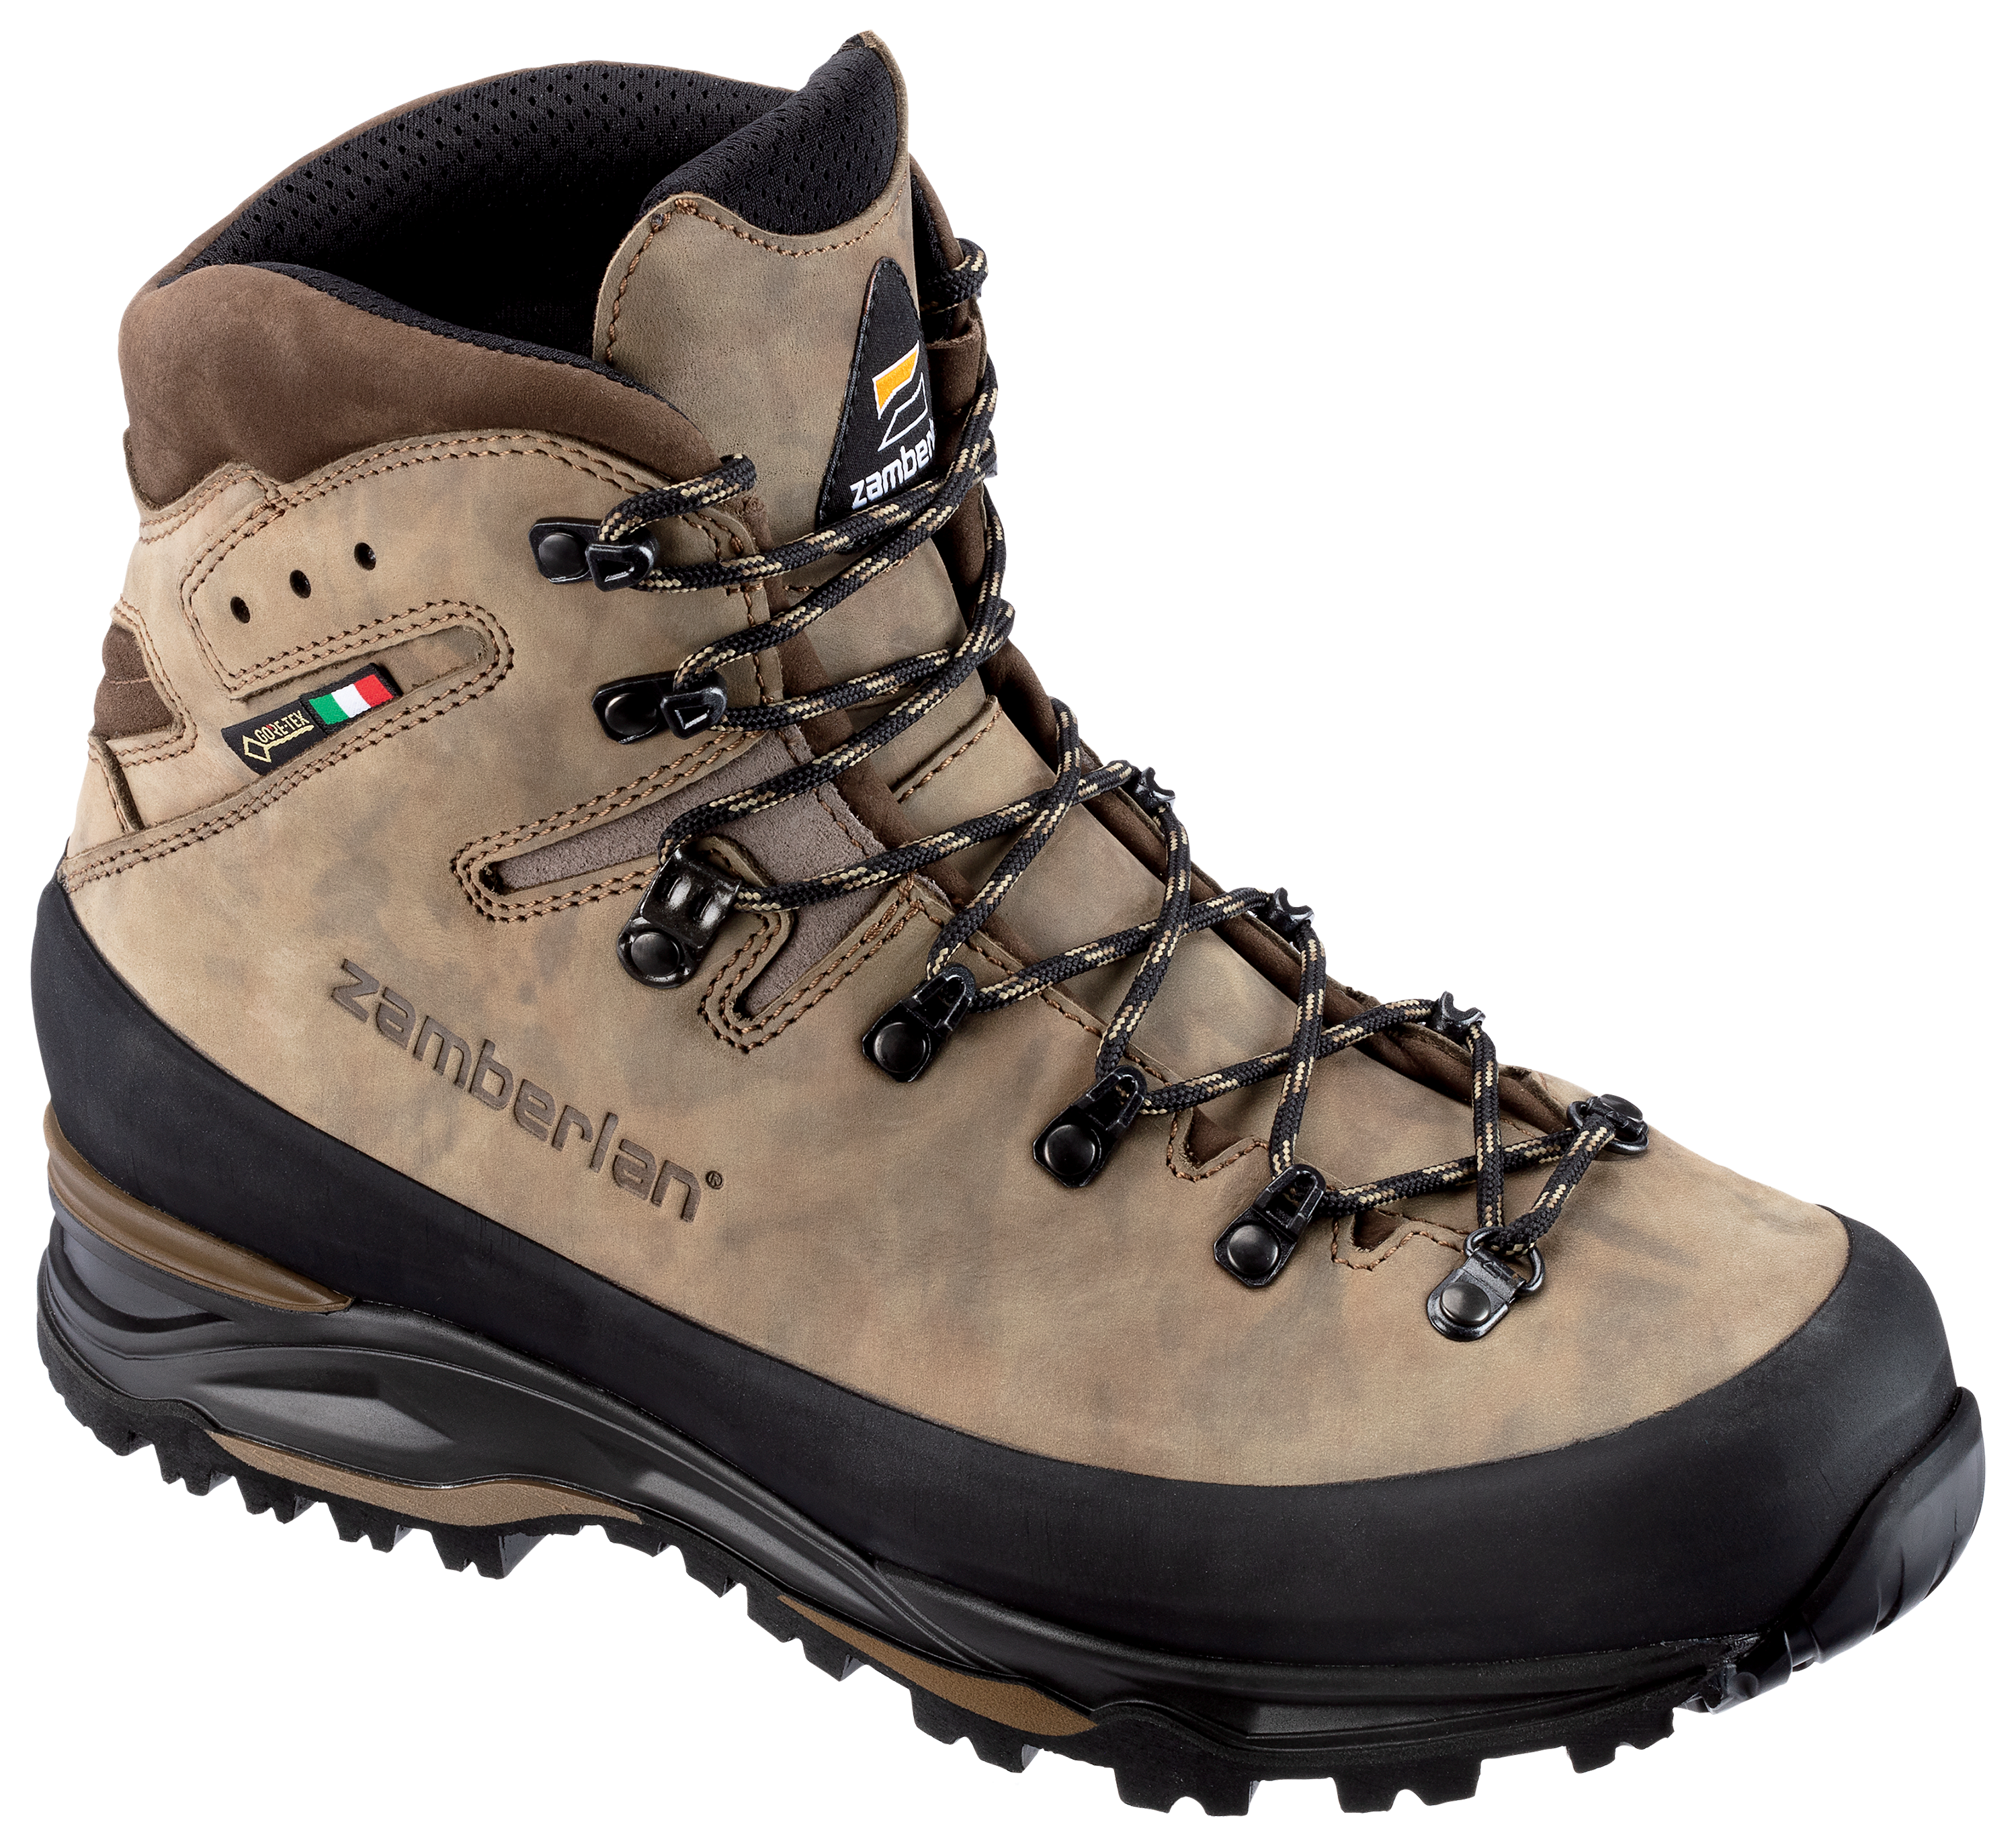 Zamberlan 960 Guide GORE-TEX RR Hunting Boots for Men - Brown Camo - 14W